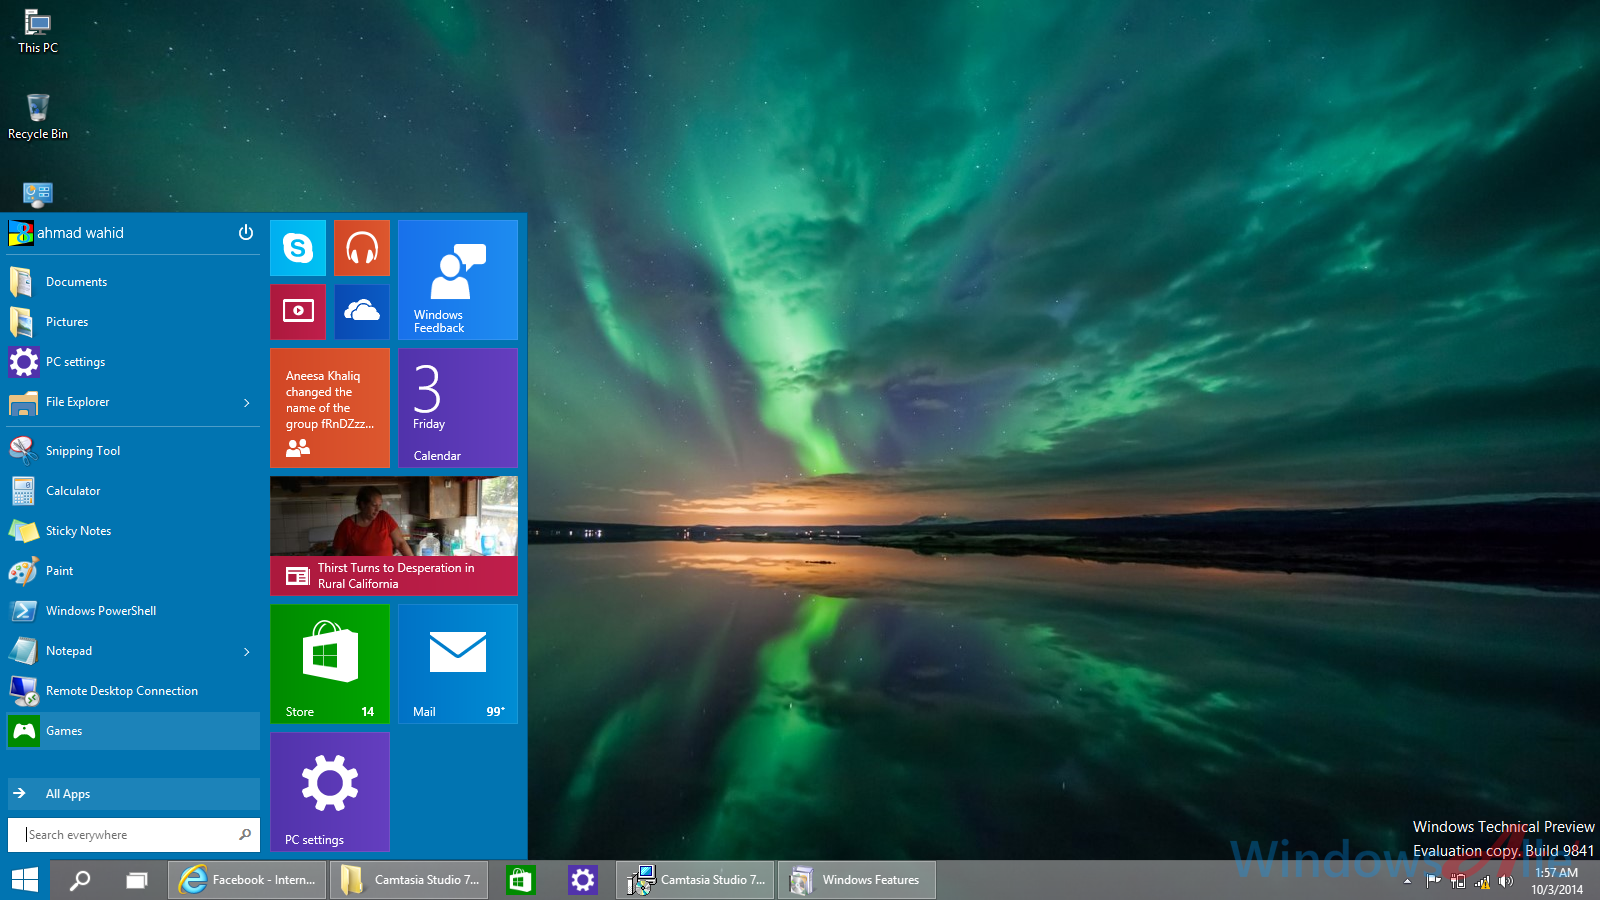 Windows 10 desktop with Start Menu